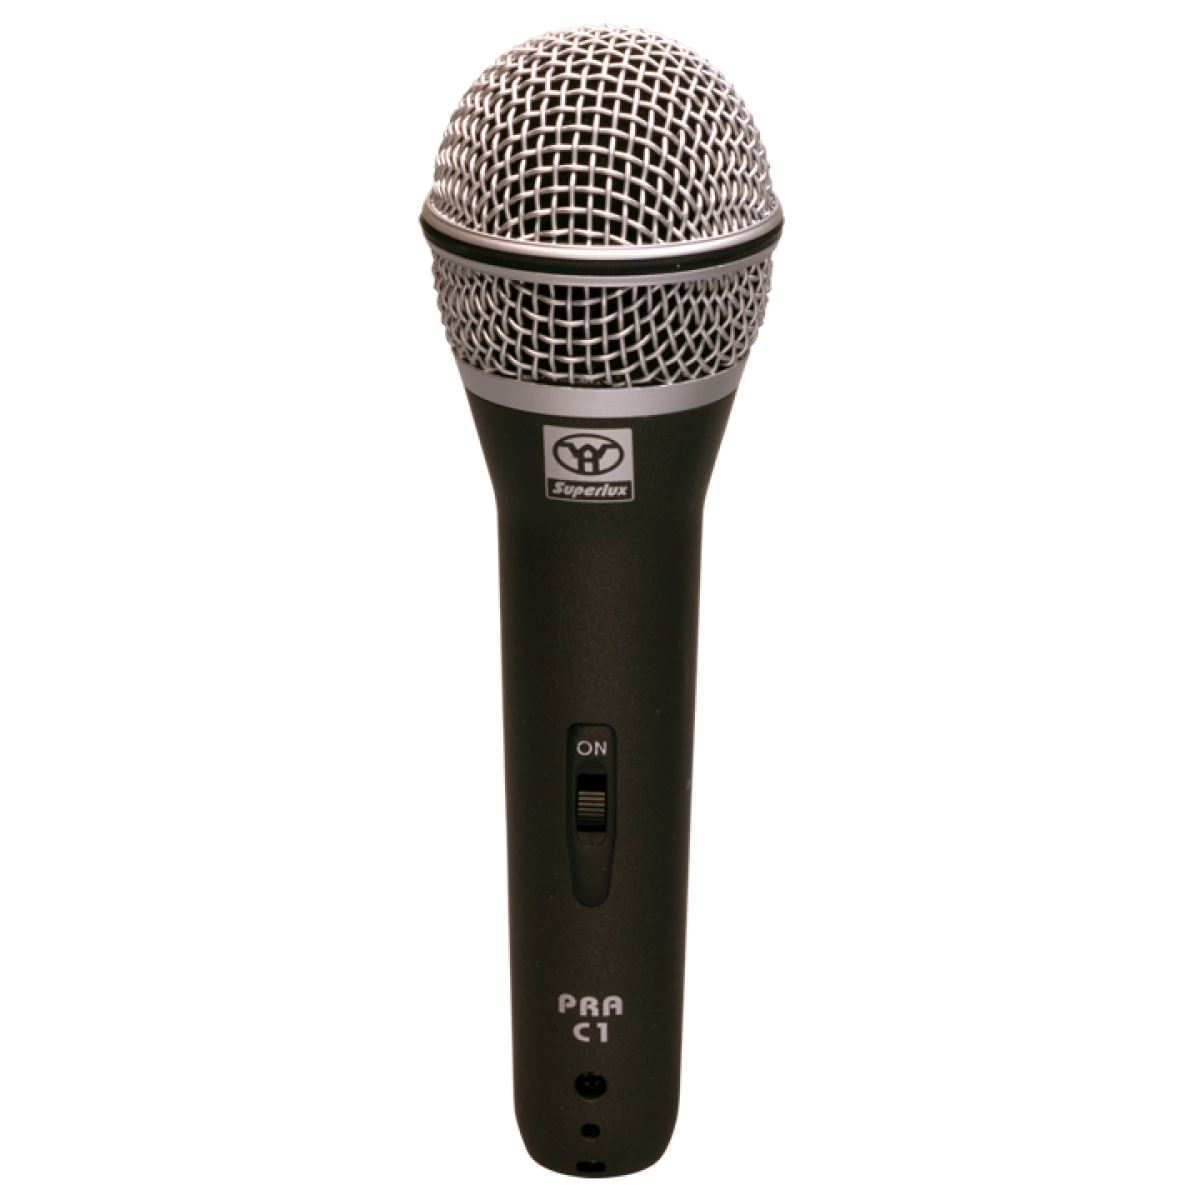 Внешние микрофоны купить. Микрофон Shure pg58-XLR. Volta DM-b58 микрофон. Микрофоны Electro-Voice re410. Микрофон Behringer SL 85s.